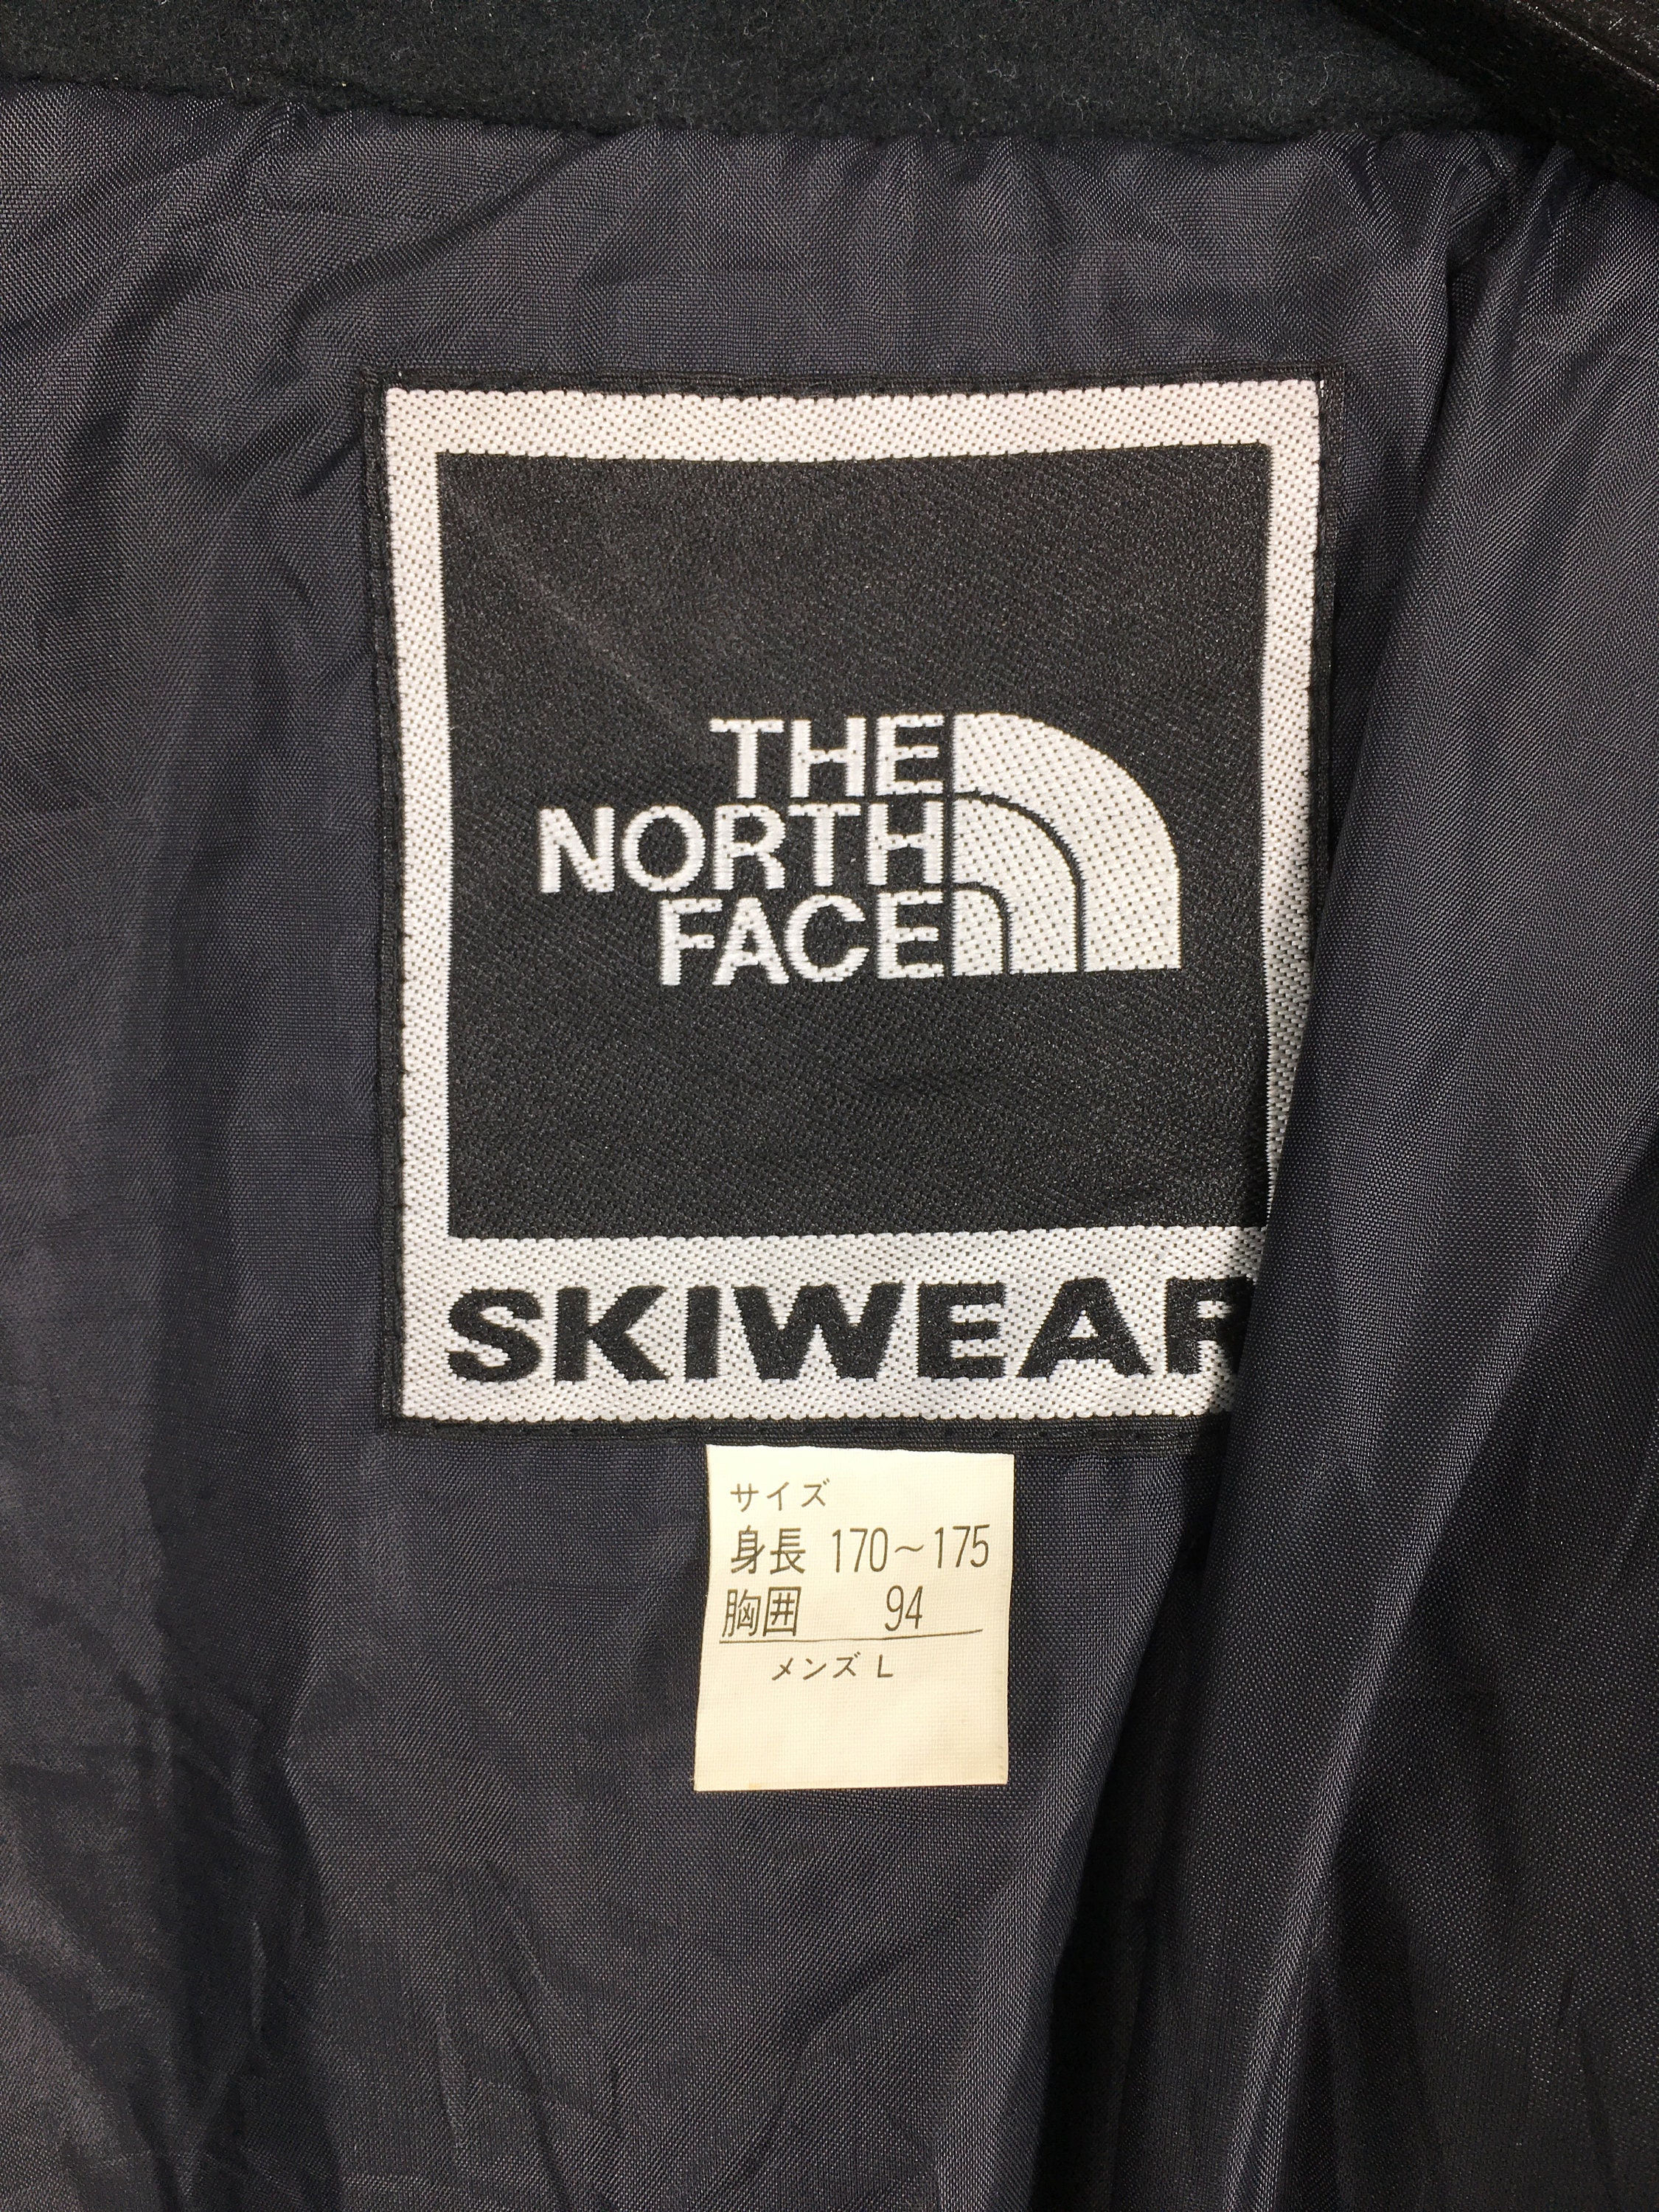 Vintage THE NORTH FACE Jacket Large 90s North Face Ski Wear | Etsy